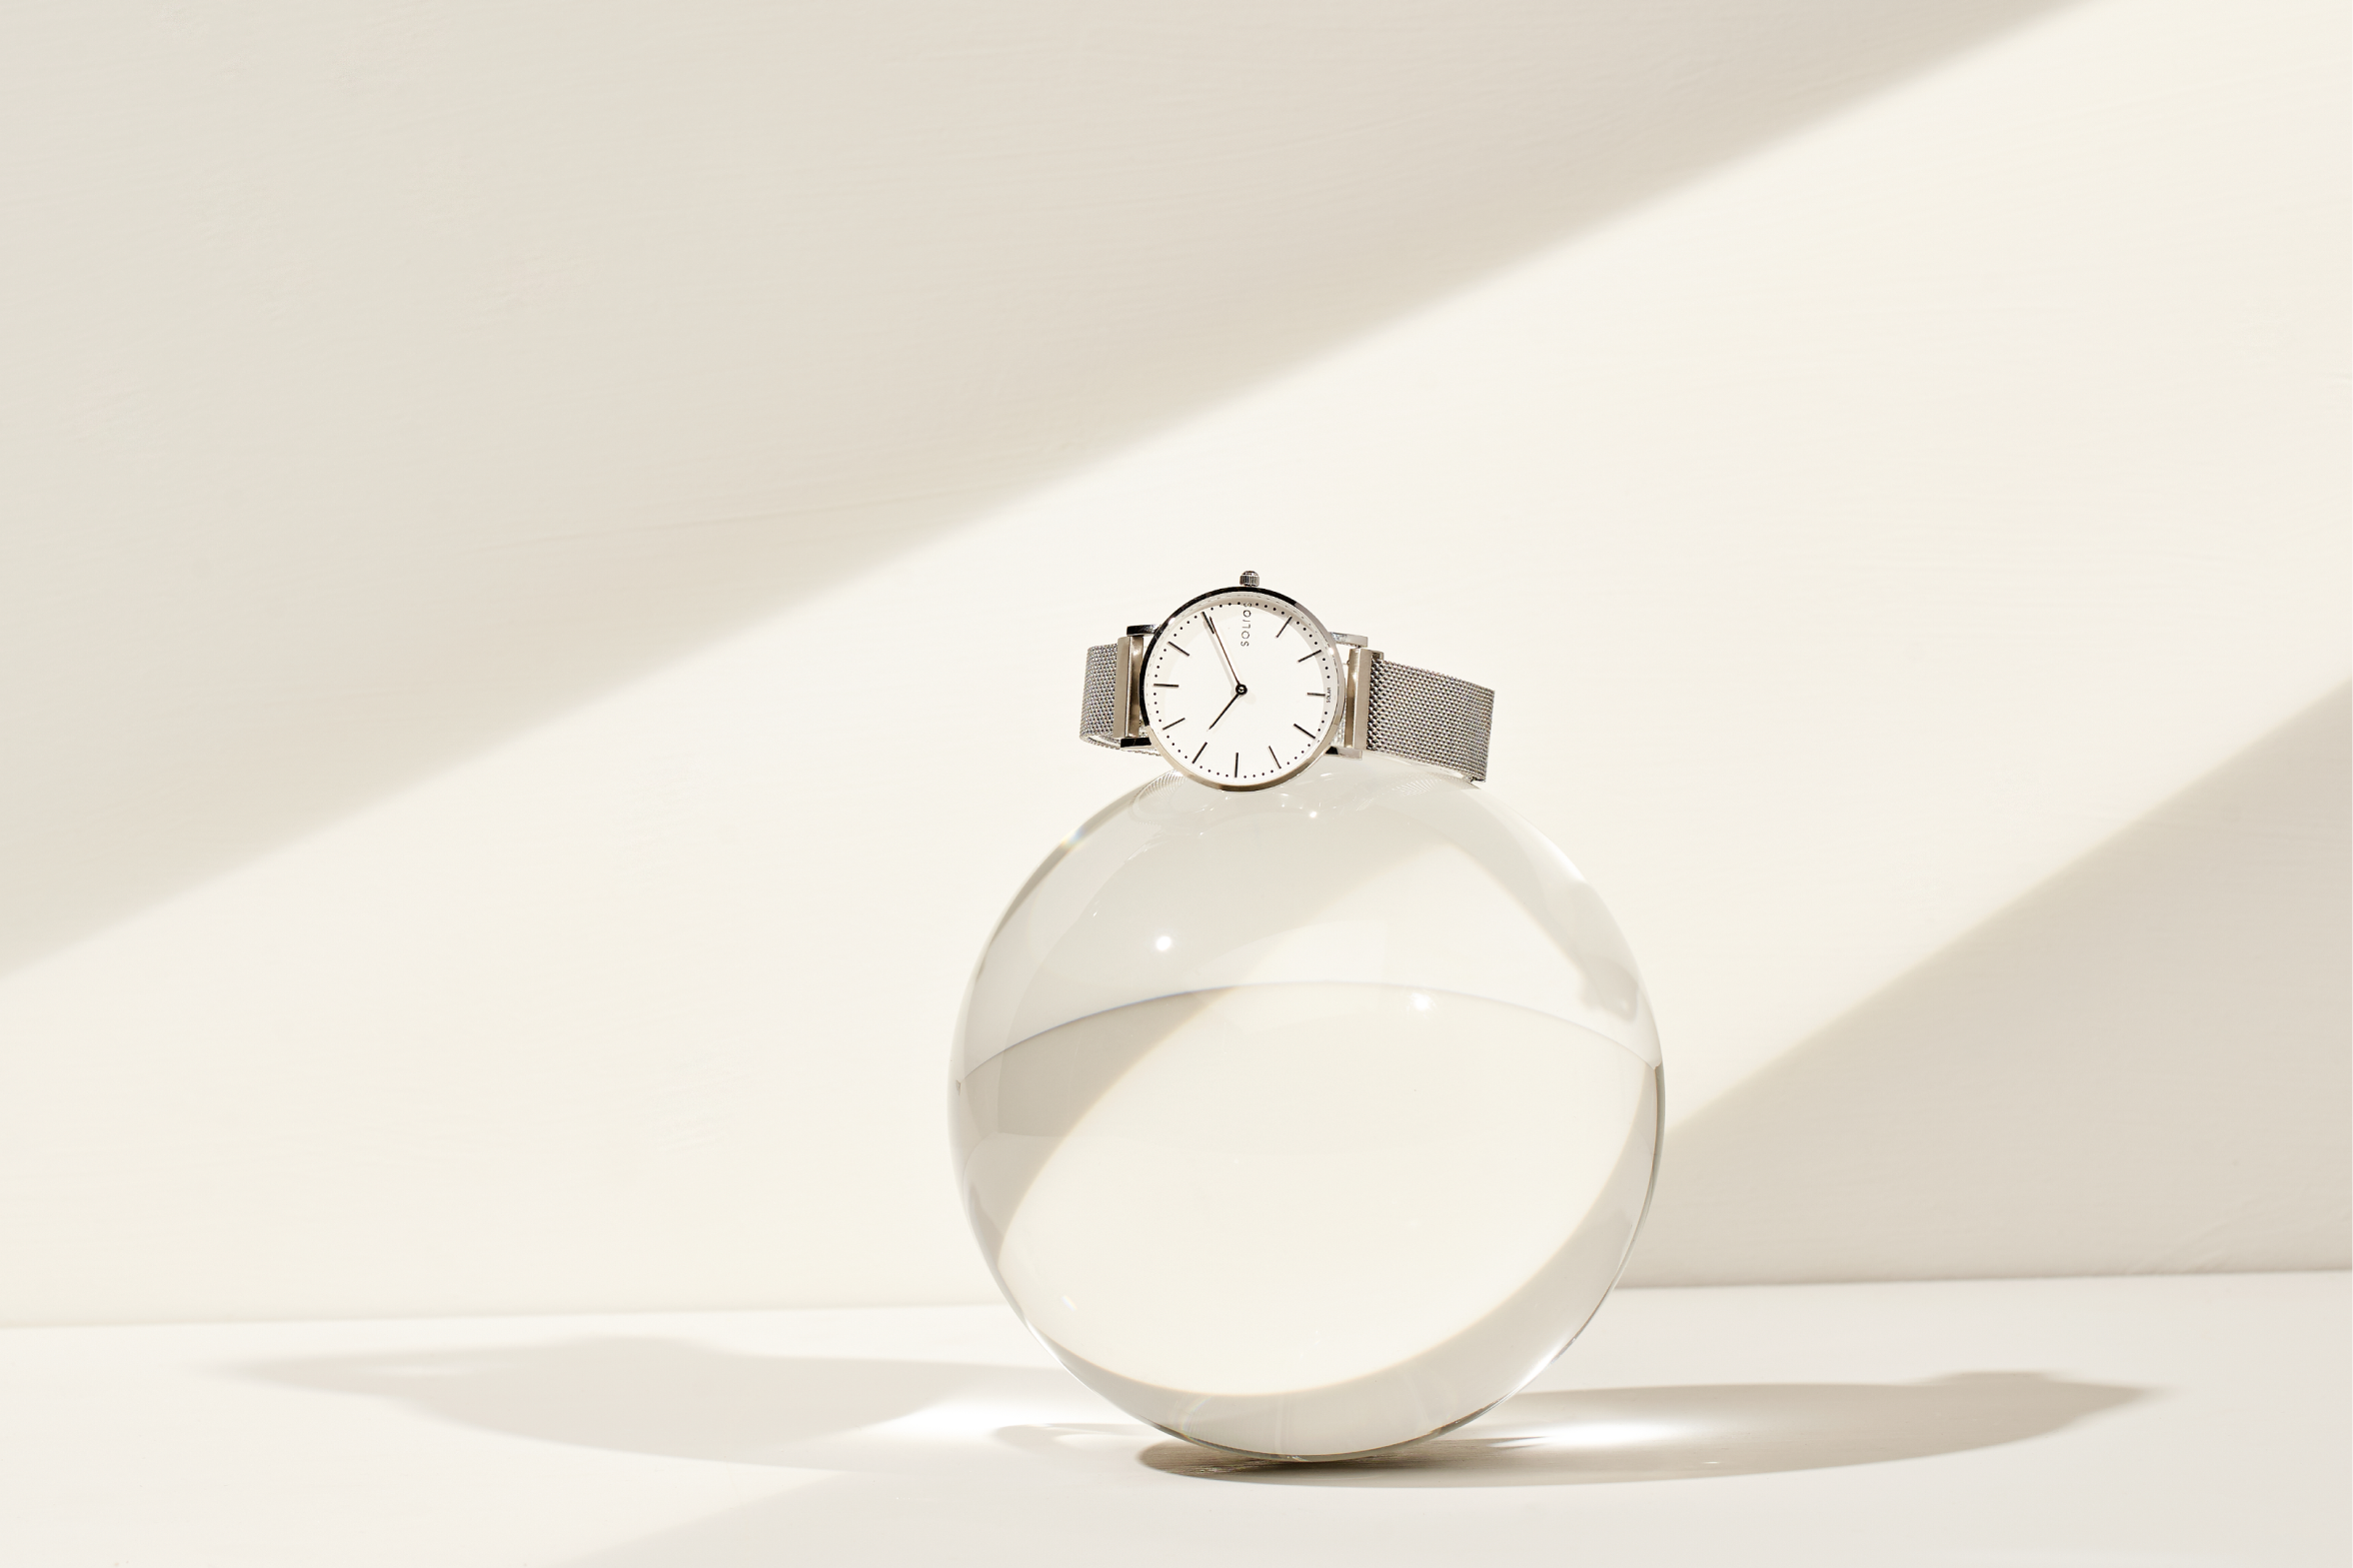 Solar watch with minimalist design